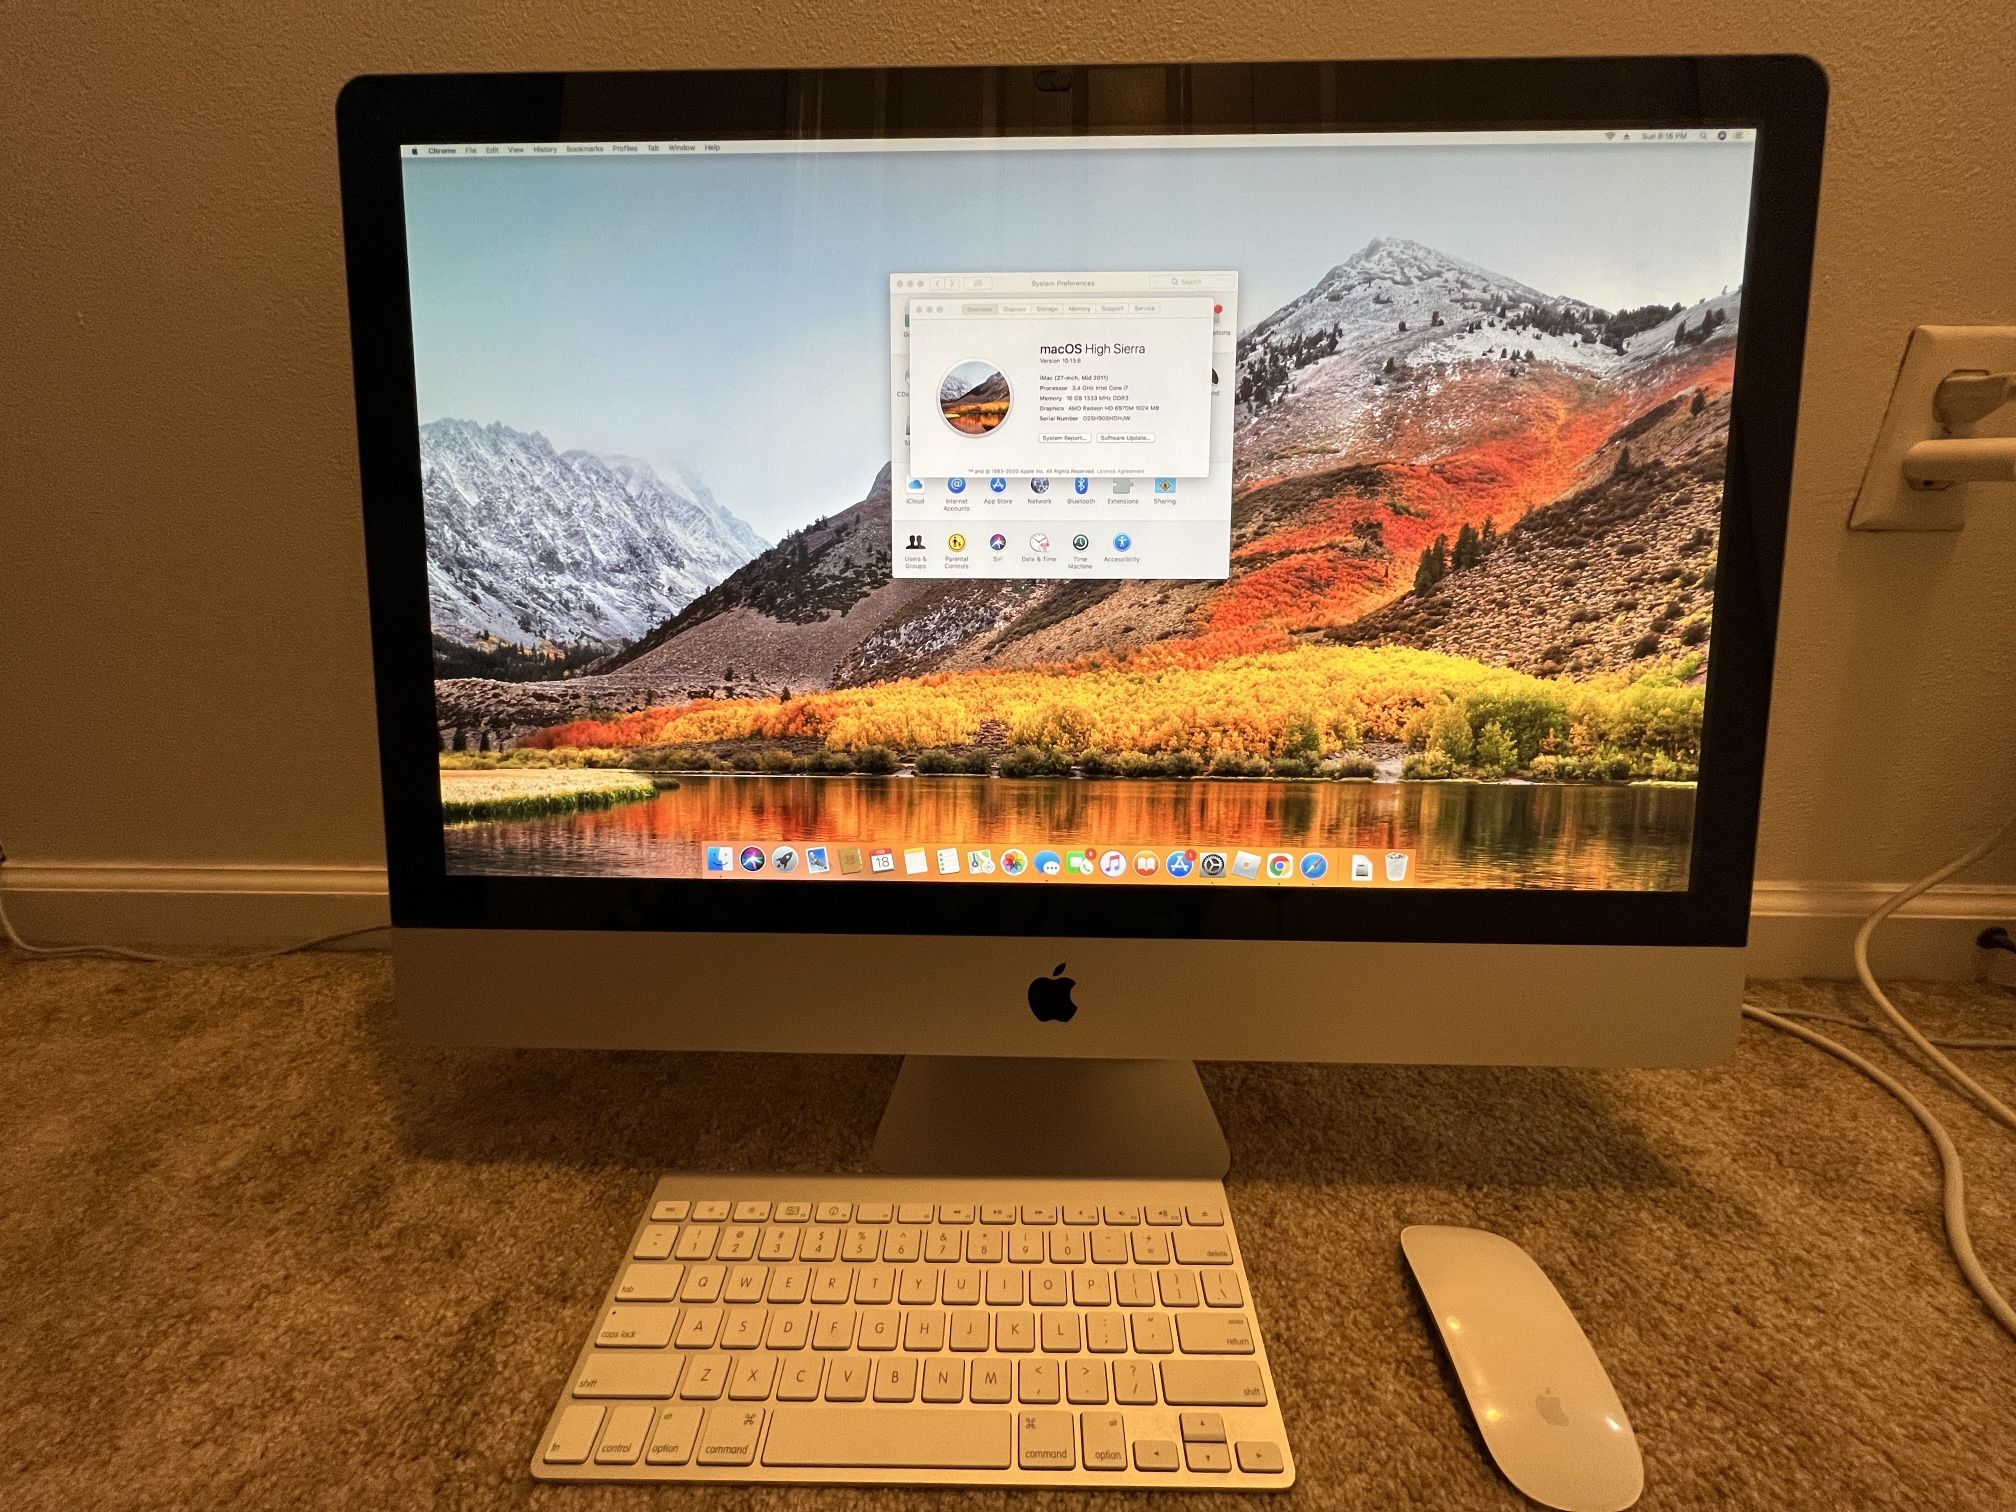 iMac 27” 2011 (GOOD CONDITION)